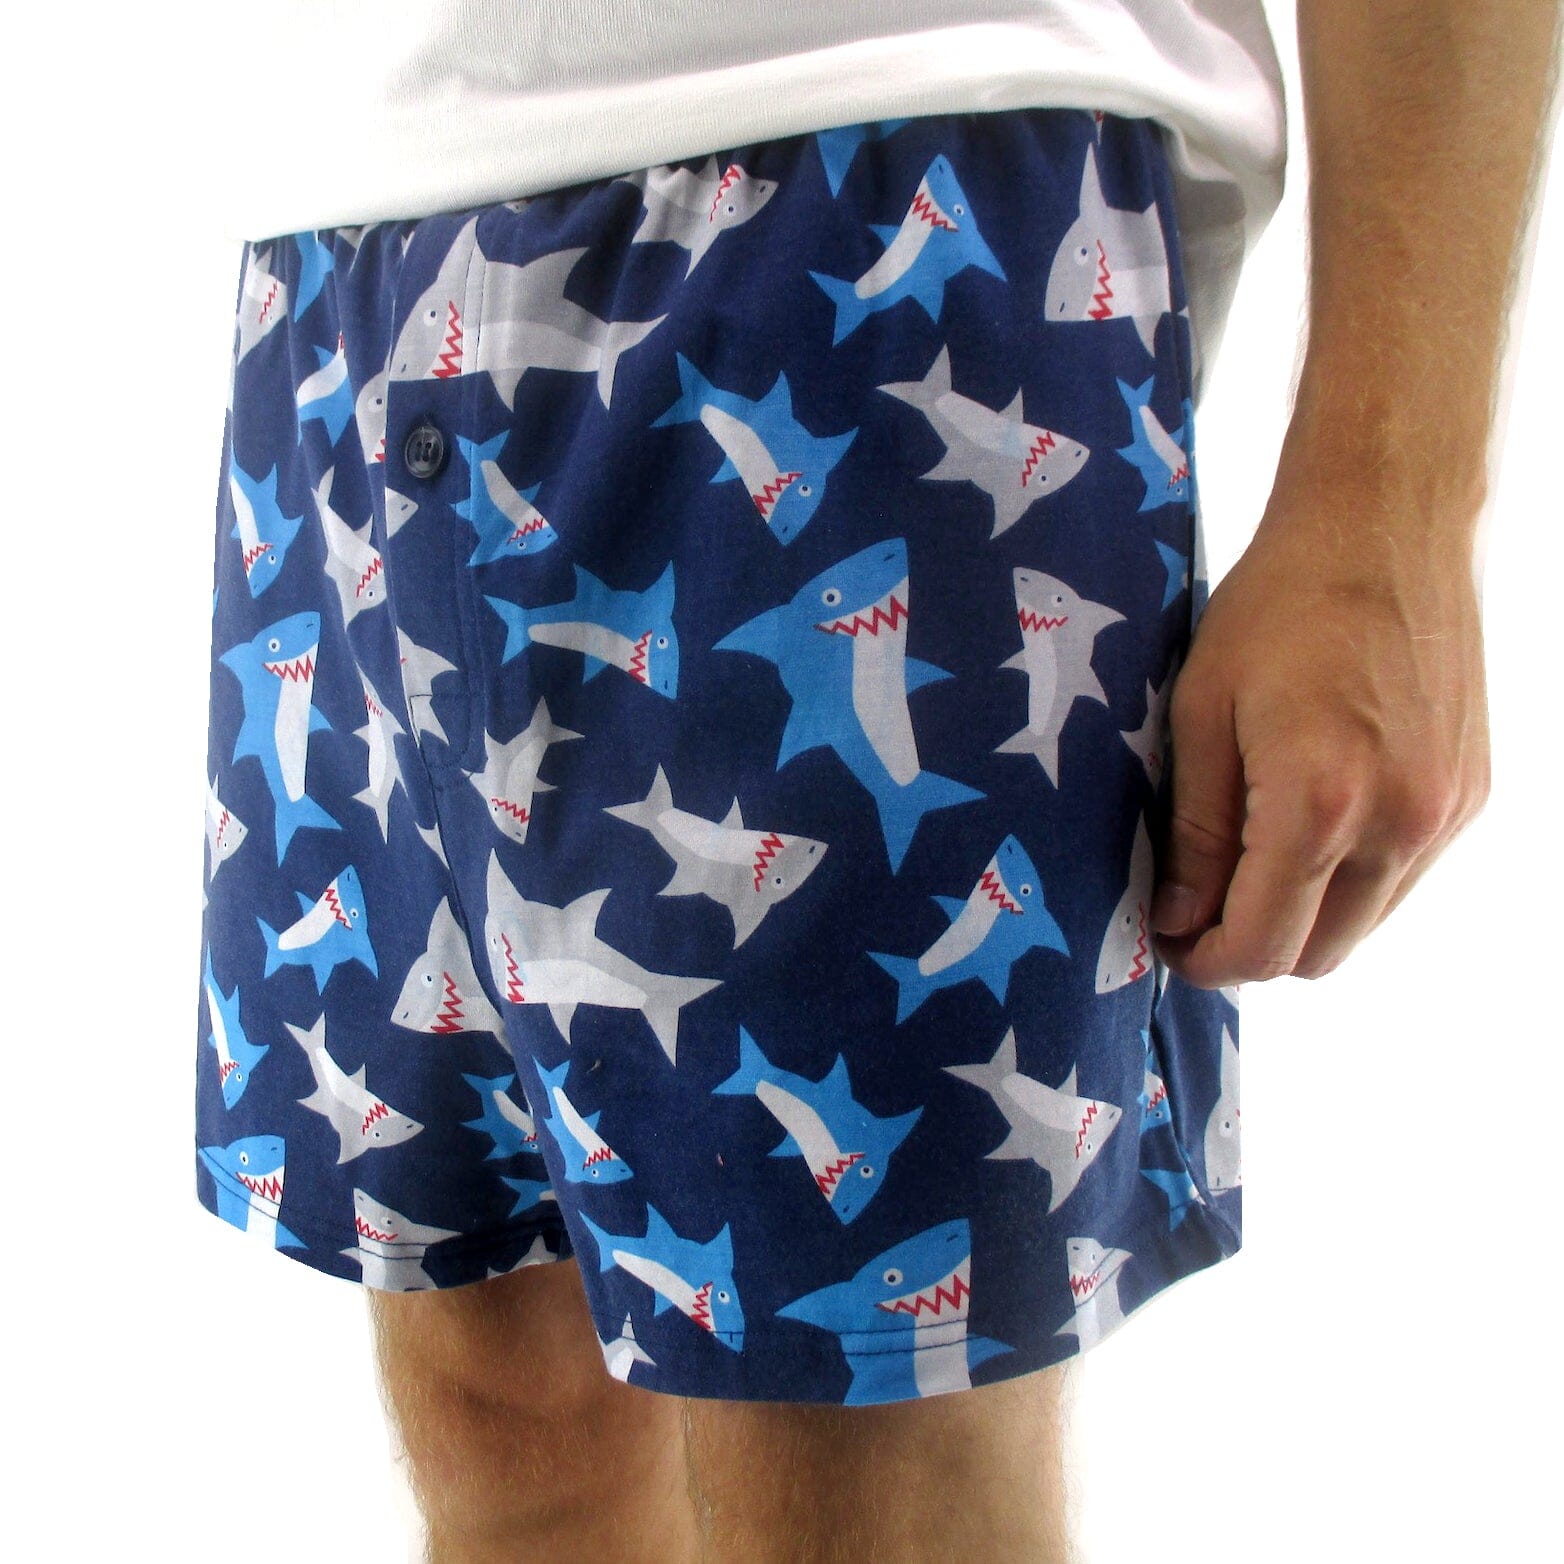 Men's Smiley Shark Novelty Print Cotton Boxer Pajama Sleep Shorts